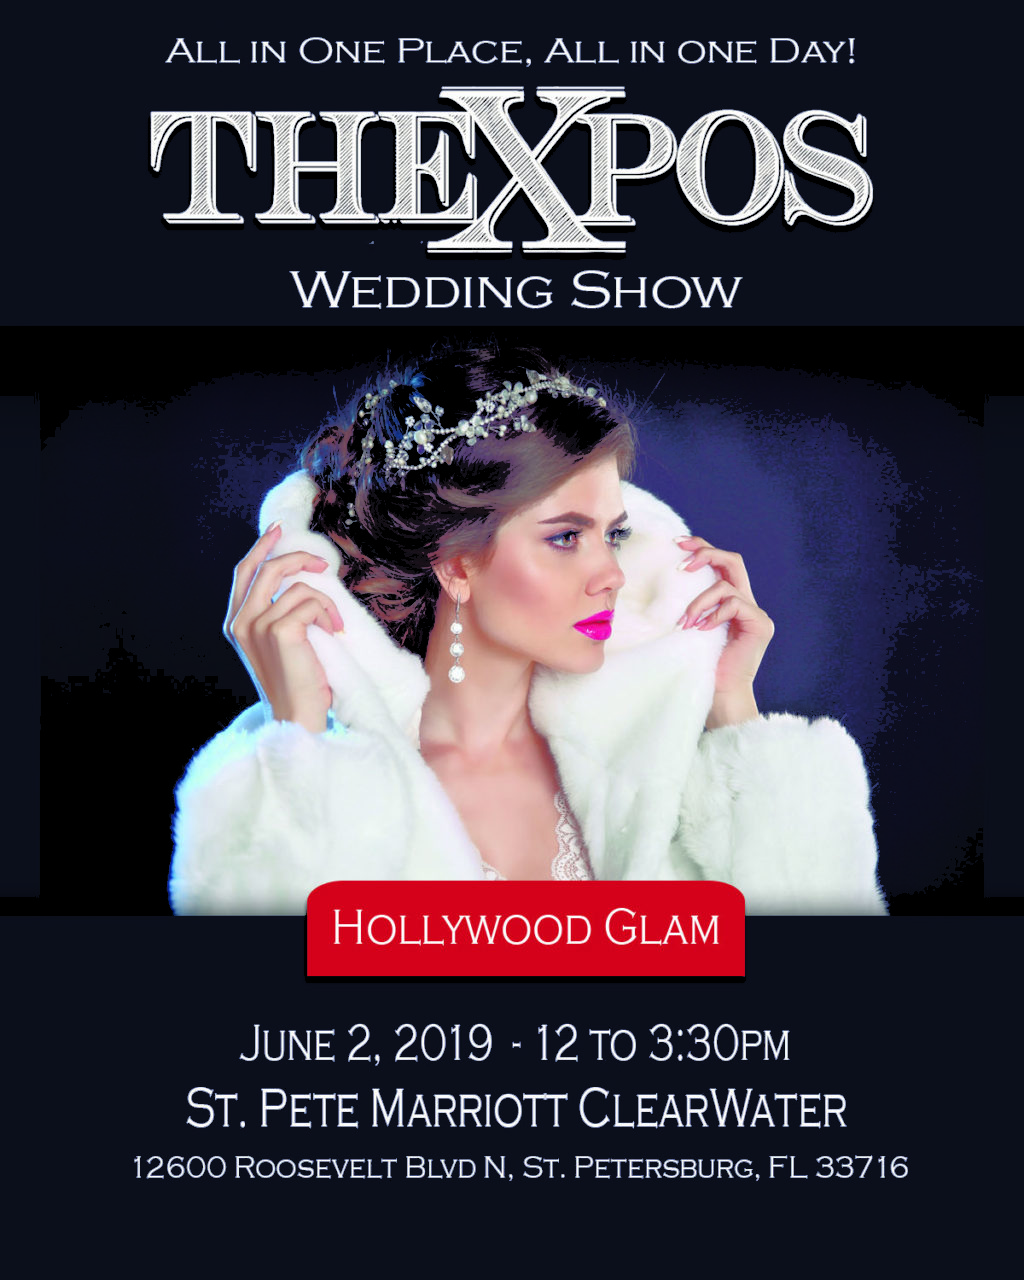 TheXpos Tampa Bay Bridal Wedding Show 2019